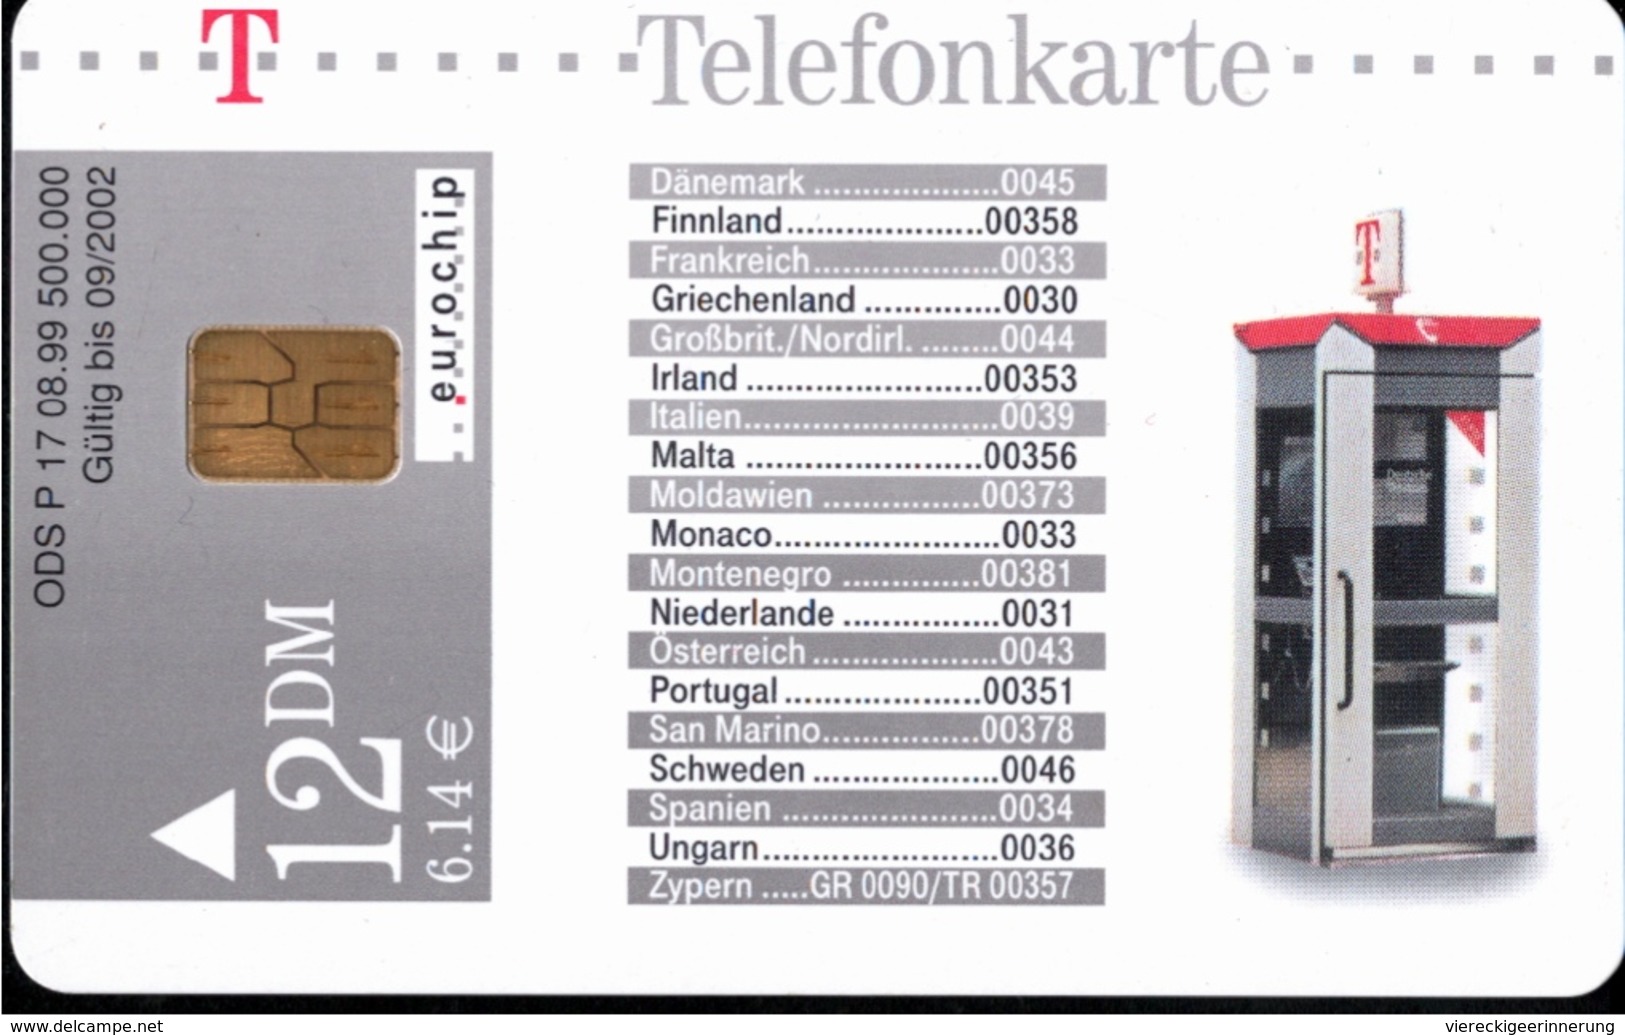 ! Telefonkarte, Telecarte, Phonecard, 1999, P17, Auflage 500000, Telekom Telefonhäuschen, Germany - P & PD-Series : Guichet - D. Telekom